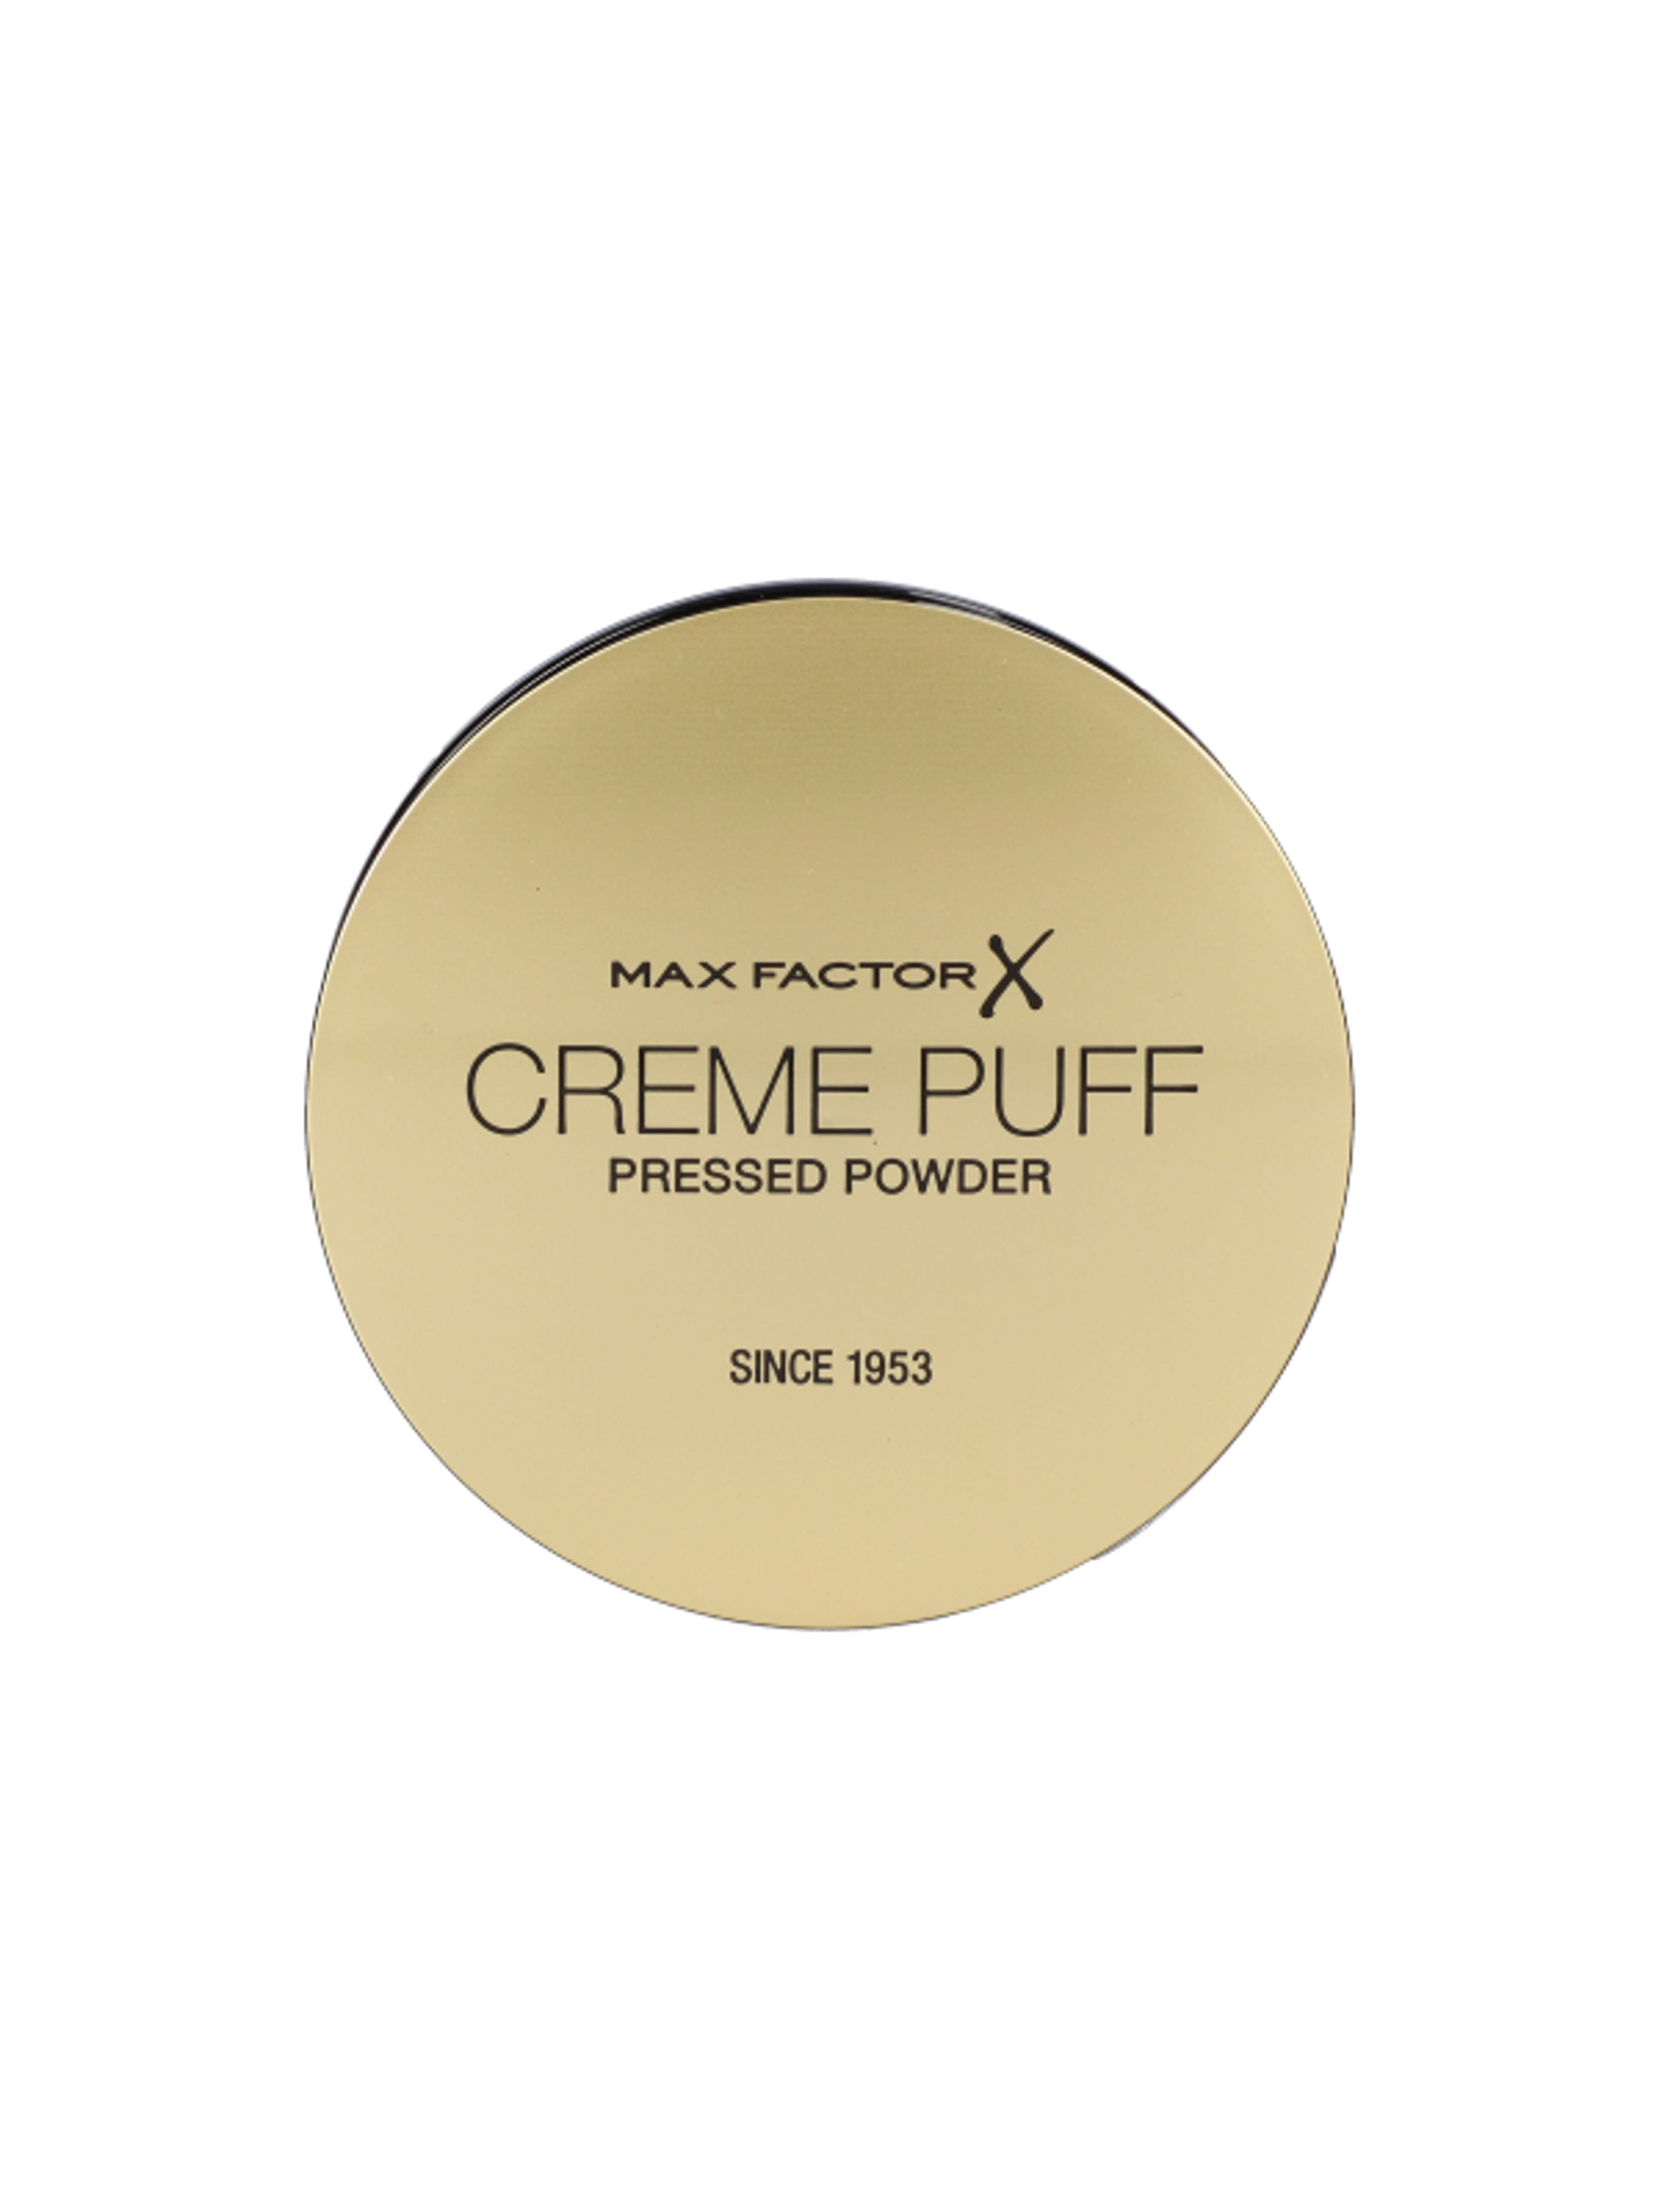 Max Factor Creme Puff púder /005 - 1db-1